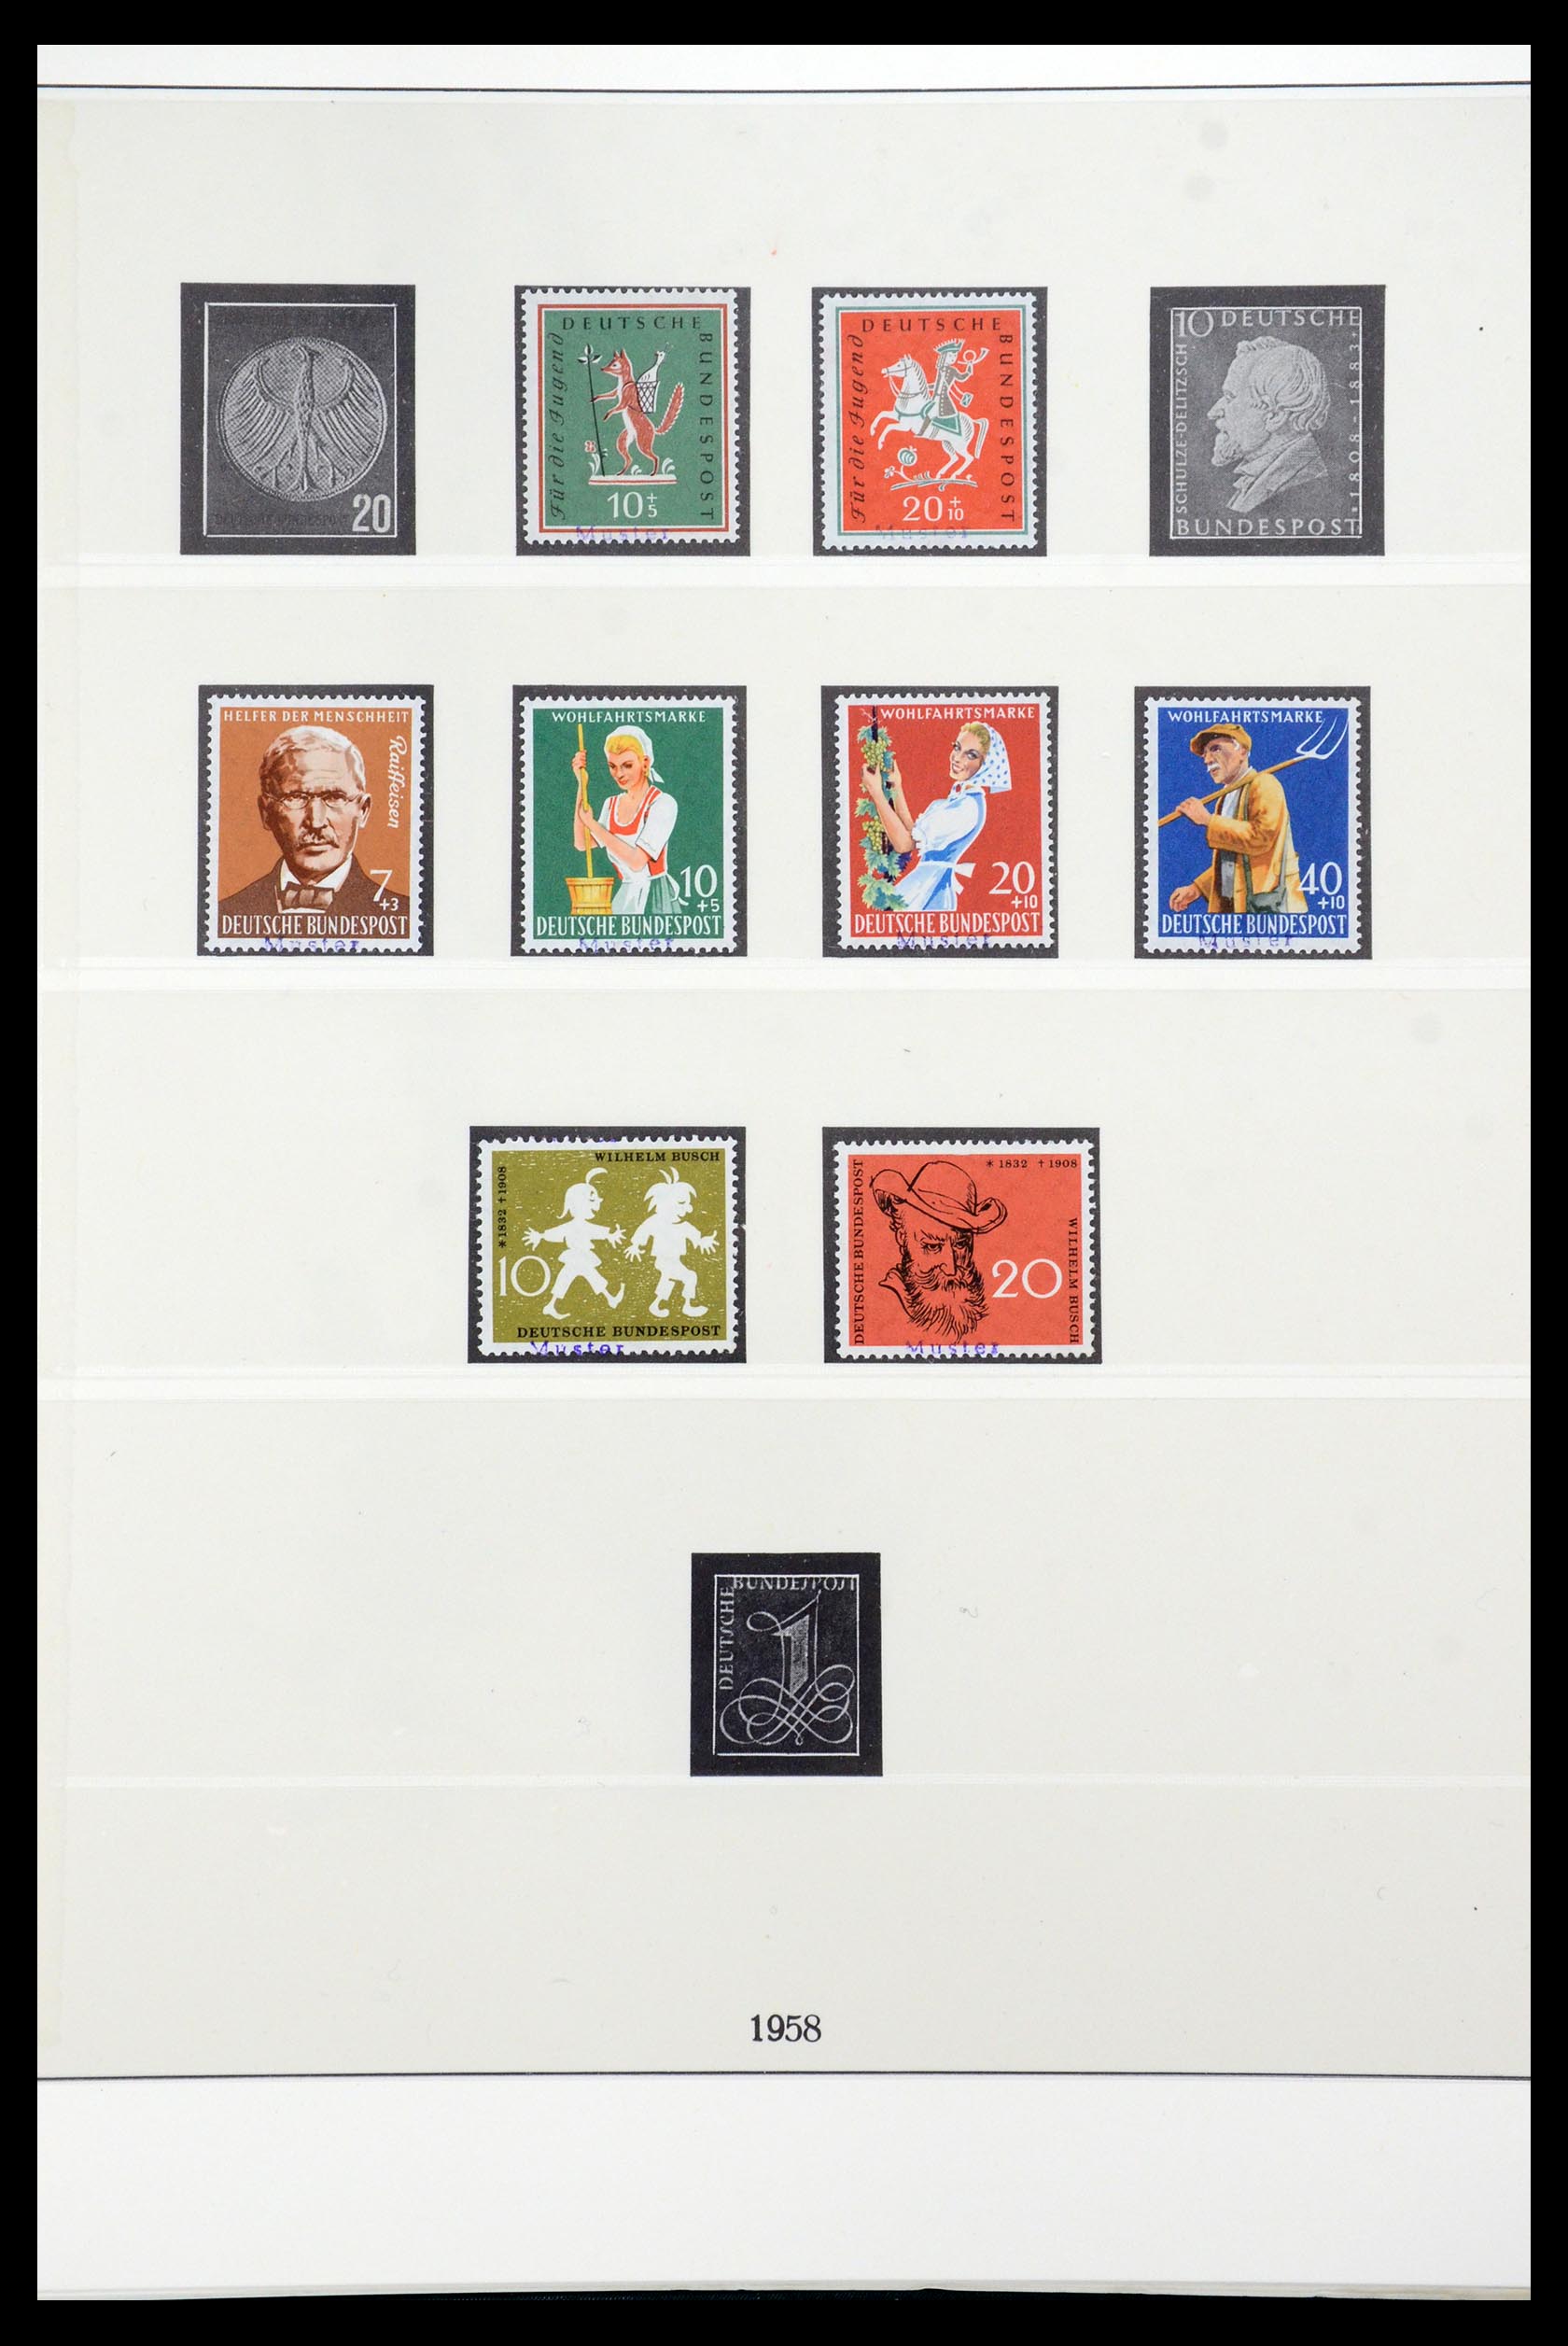 35973 009 - Stamp collection 35973 Bundespost specimen 1952-2002.